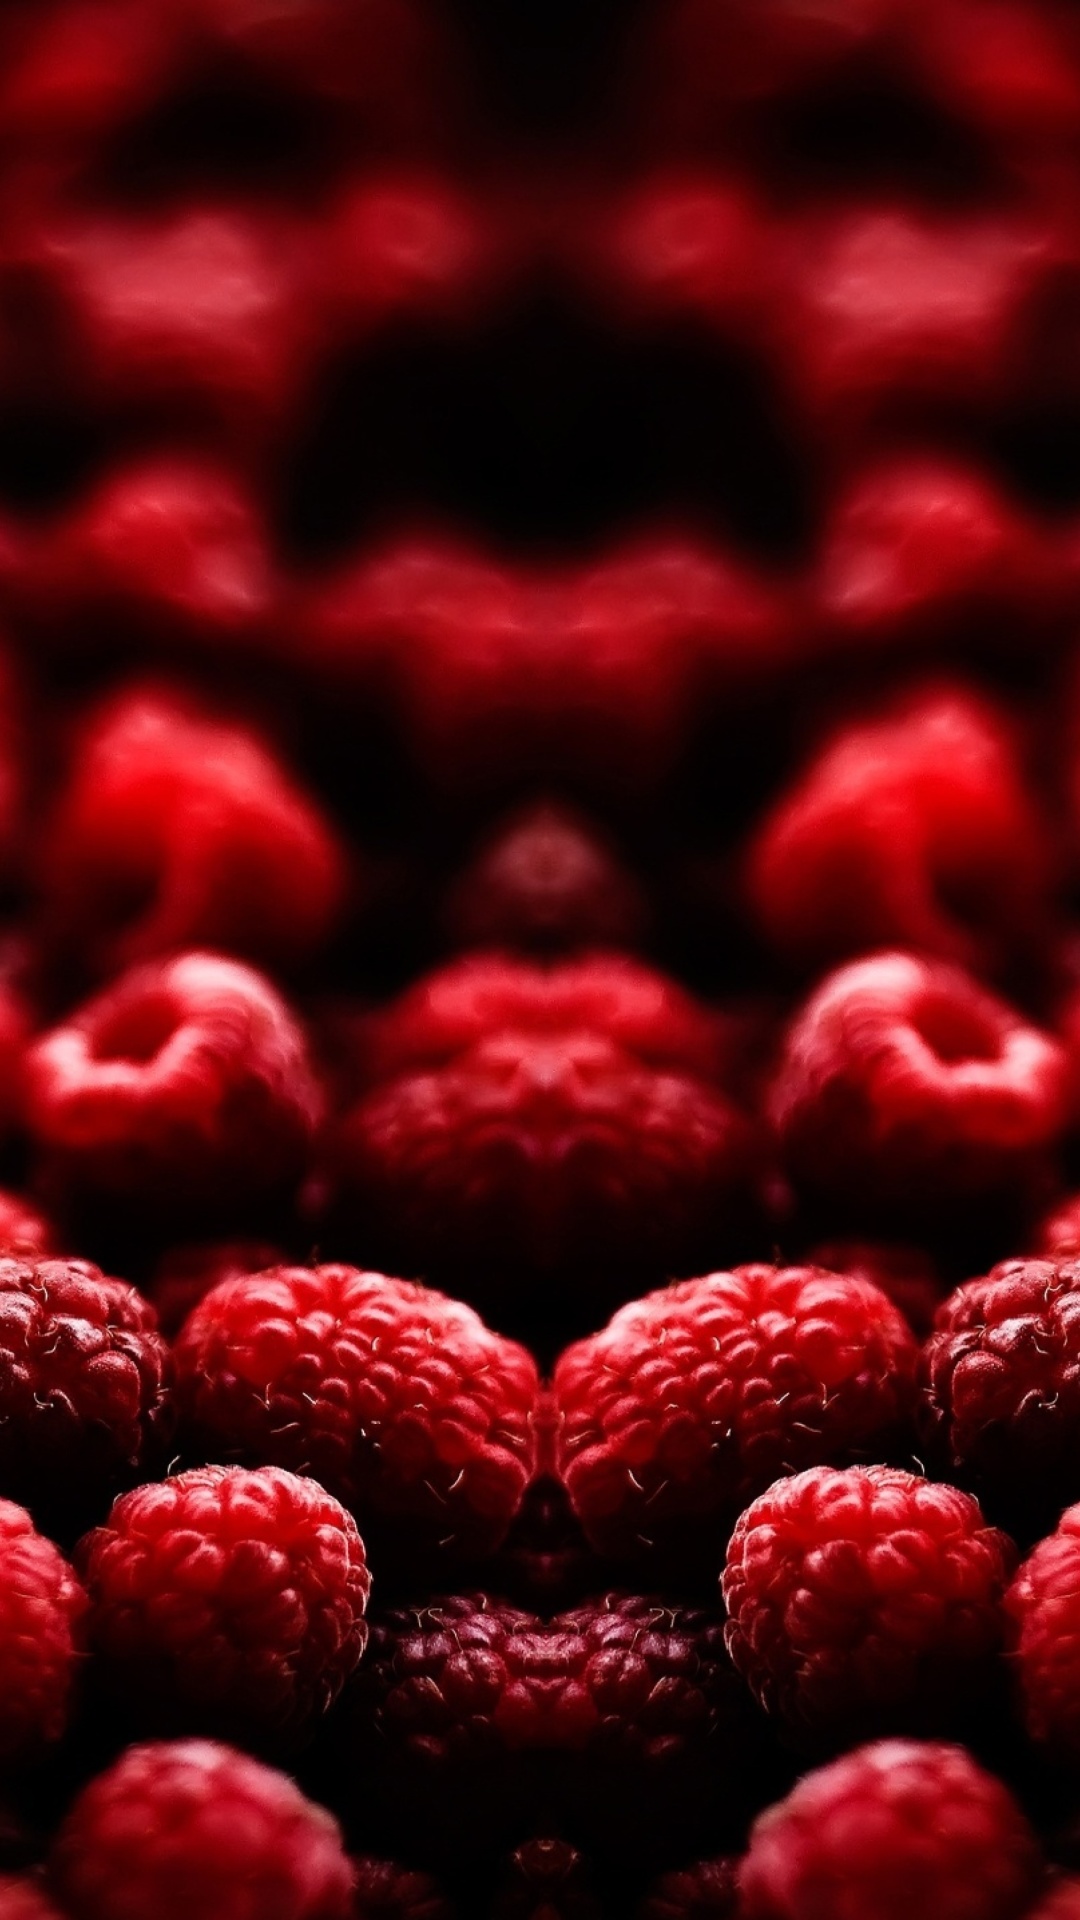 Appetizing Raspberries wallpaper 1080x1920